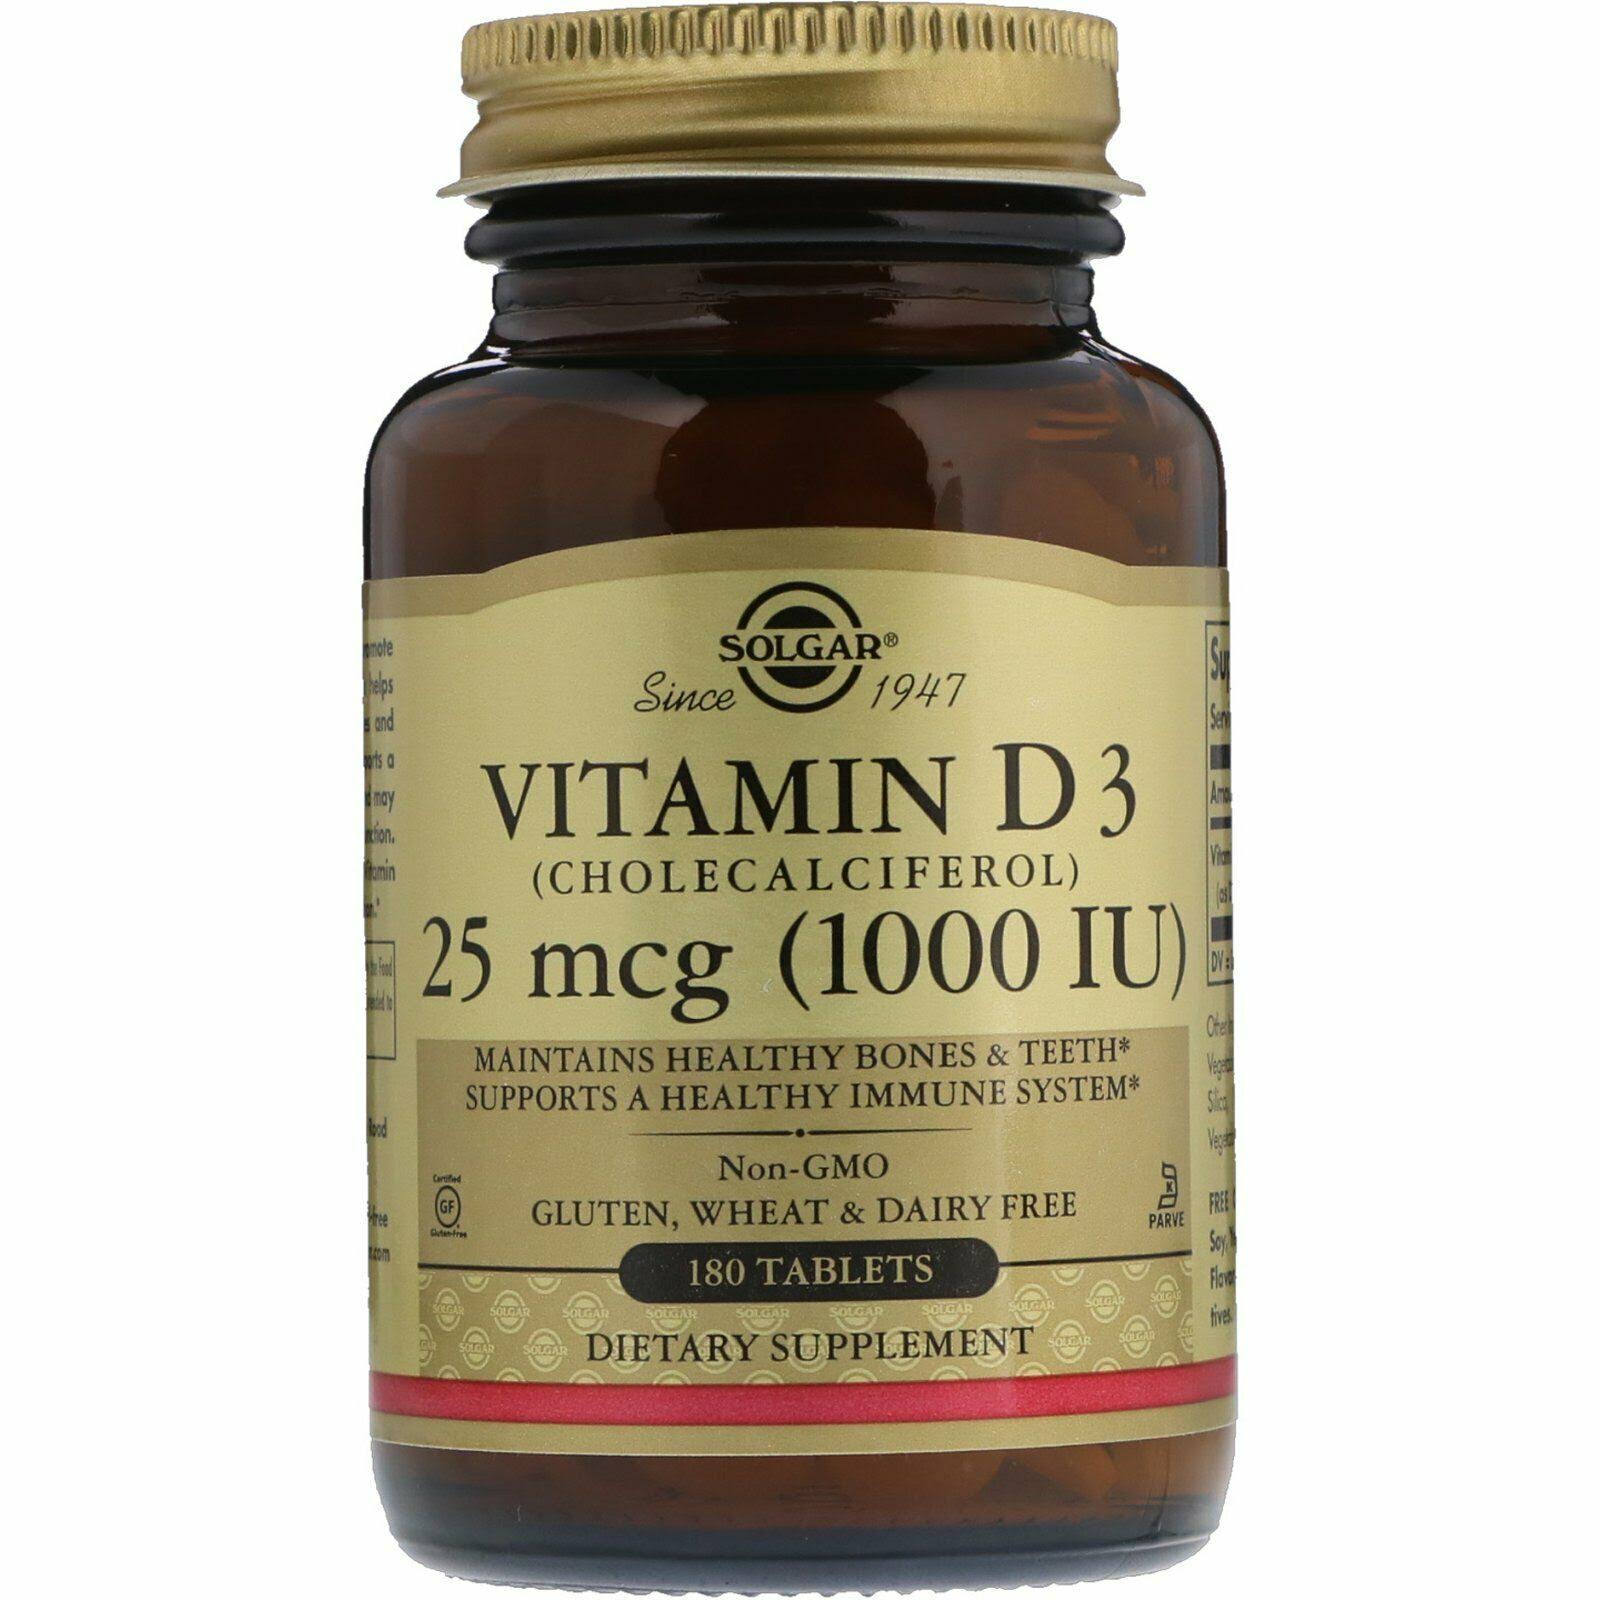 Solgar Vitamin D3 1000 IU Bones & Teeth Support - 180 Tablets